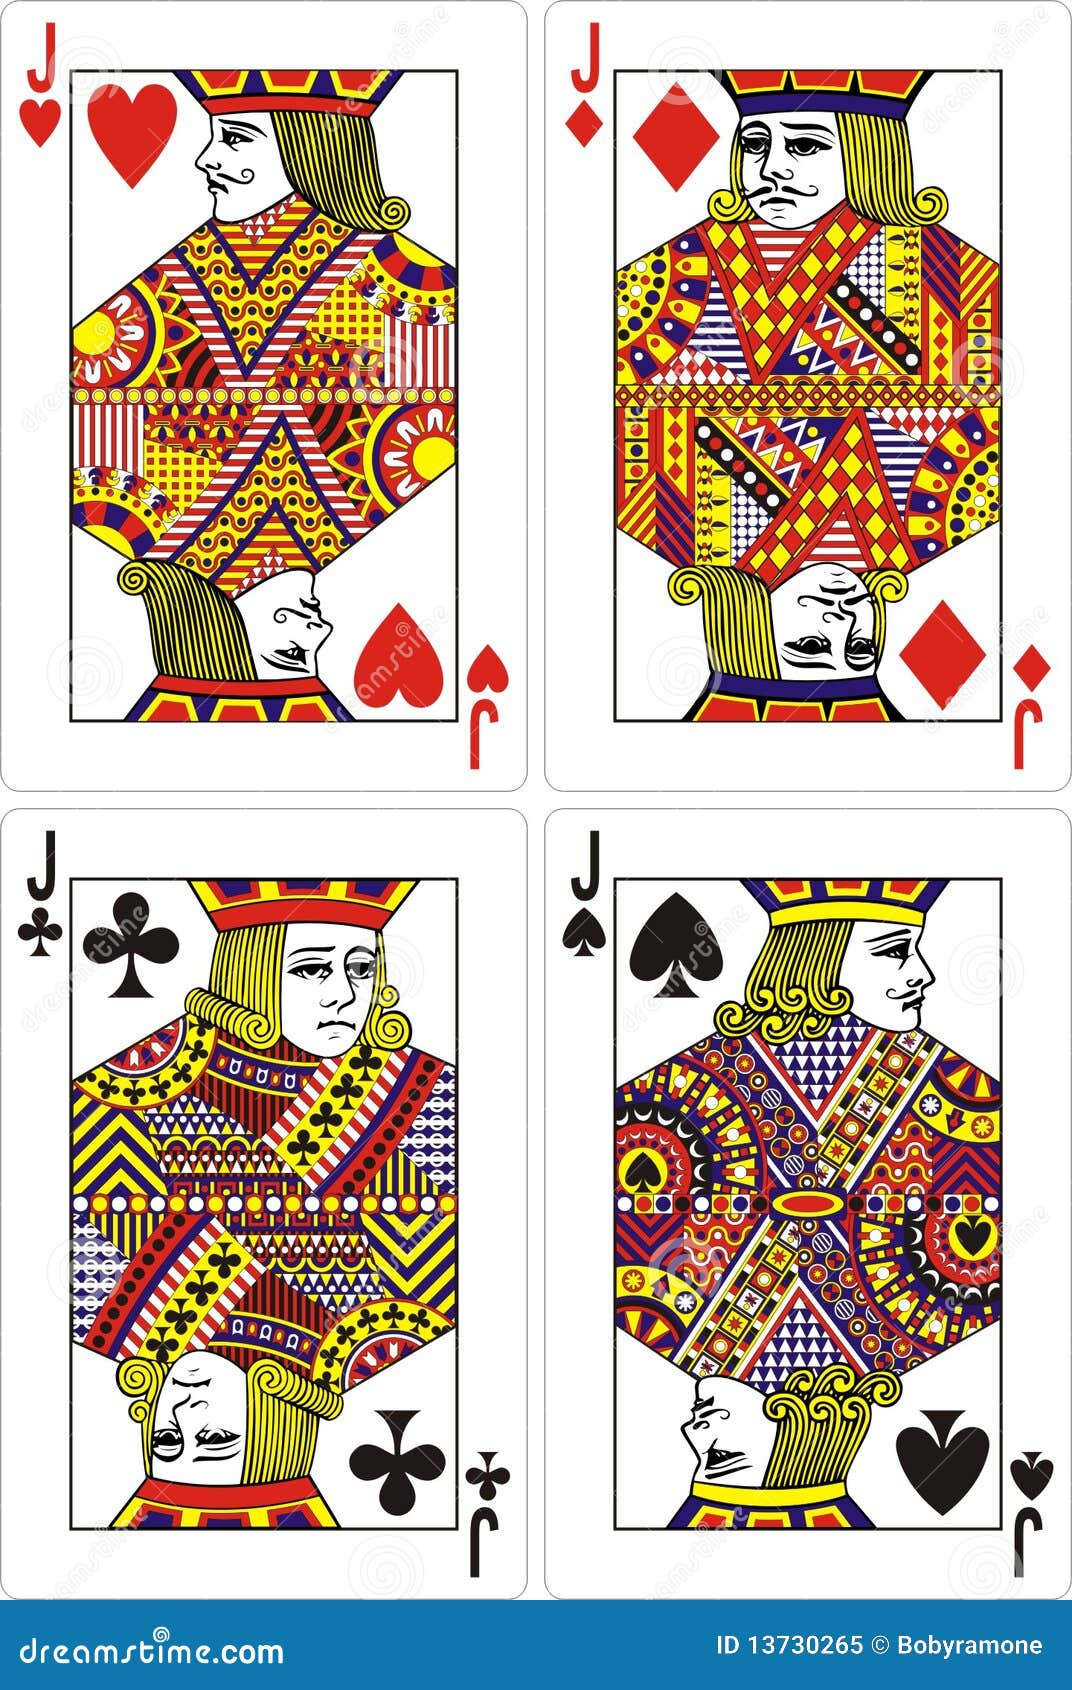 Playing Cards Jacks